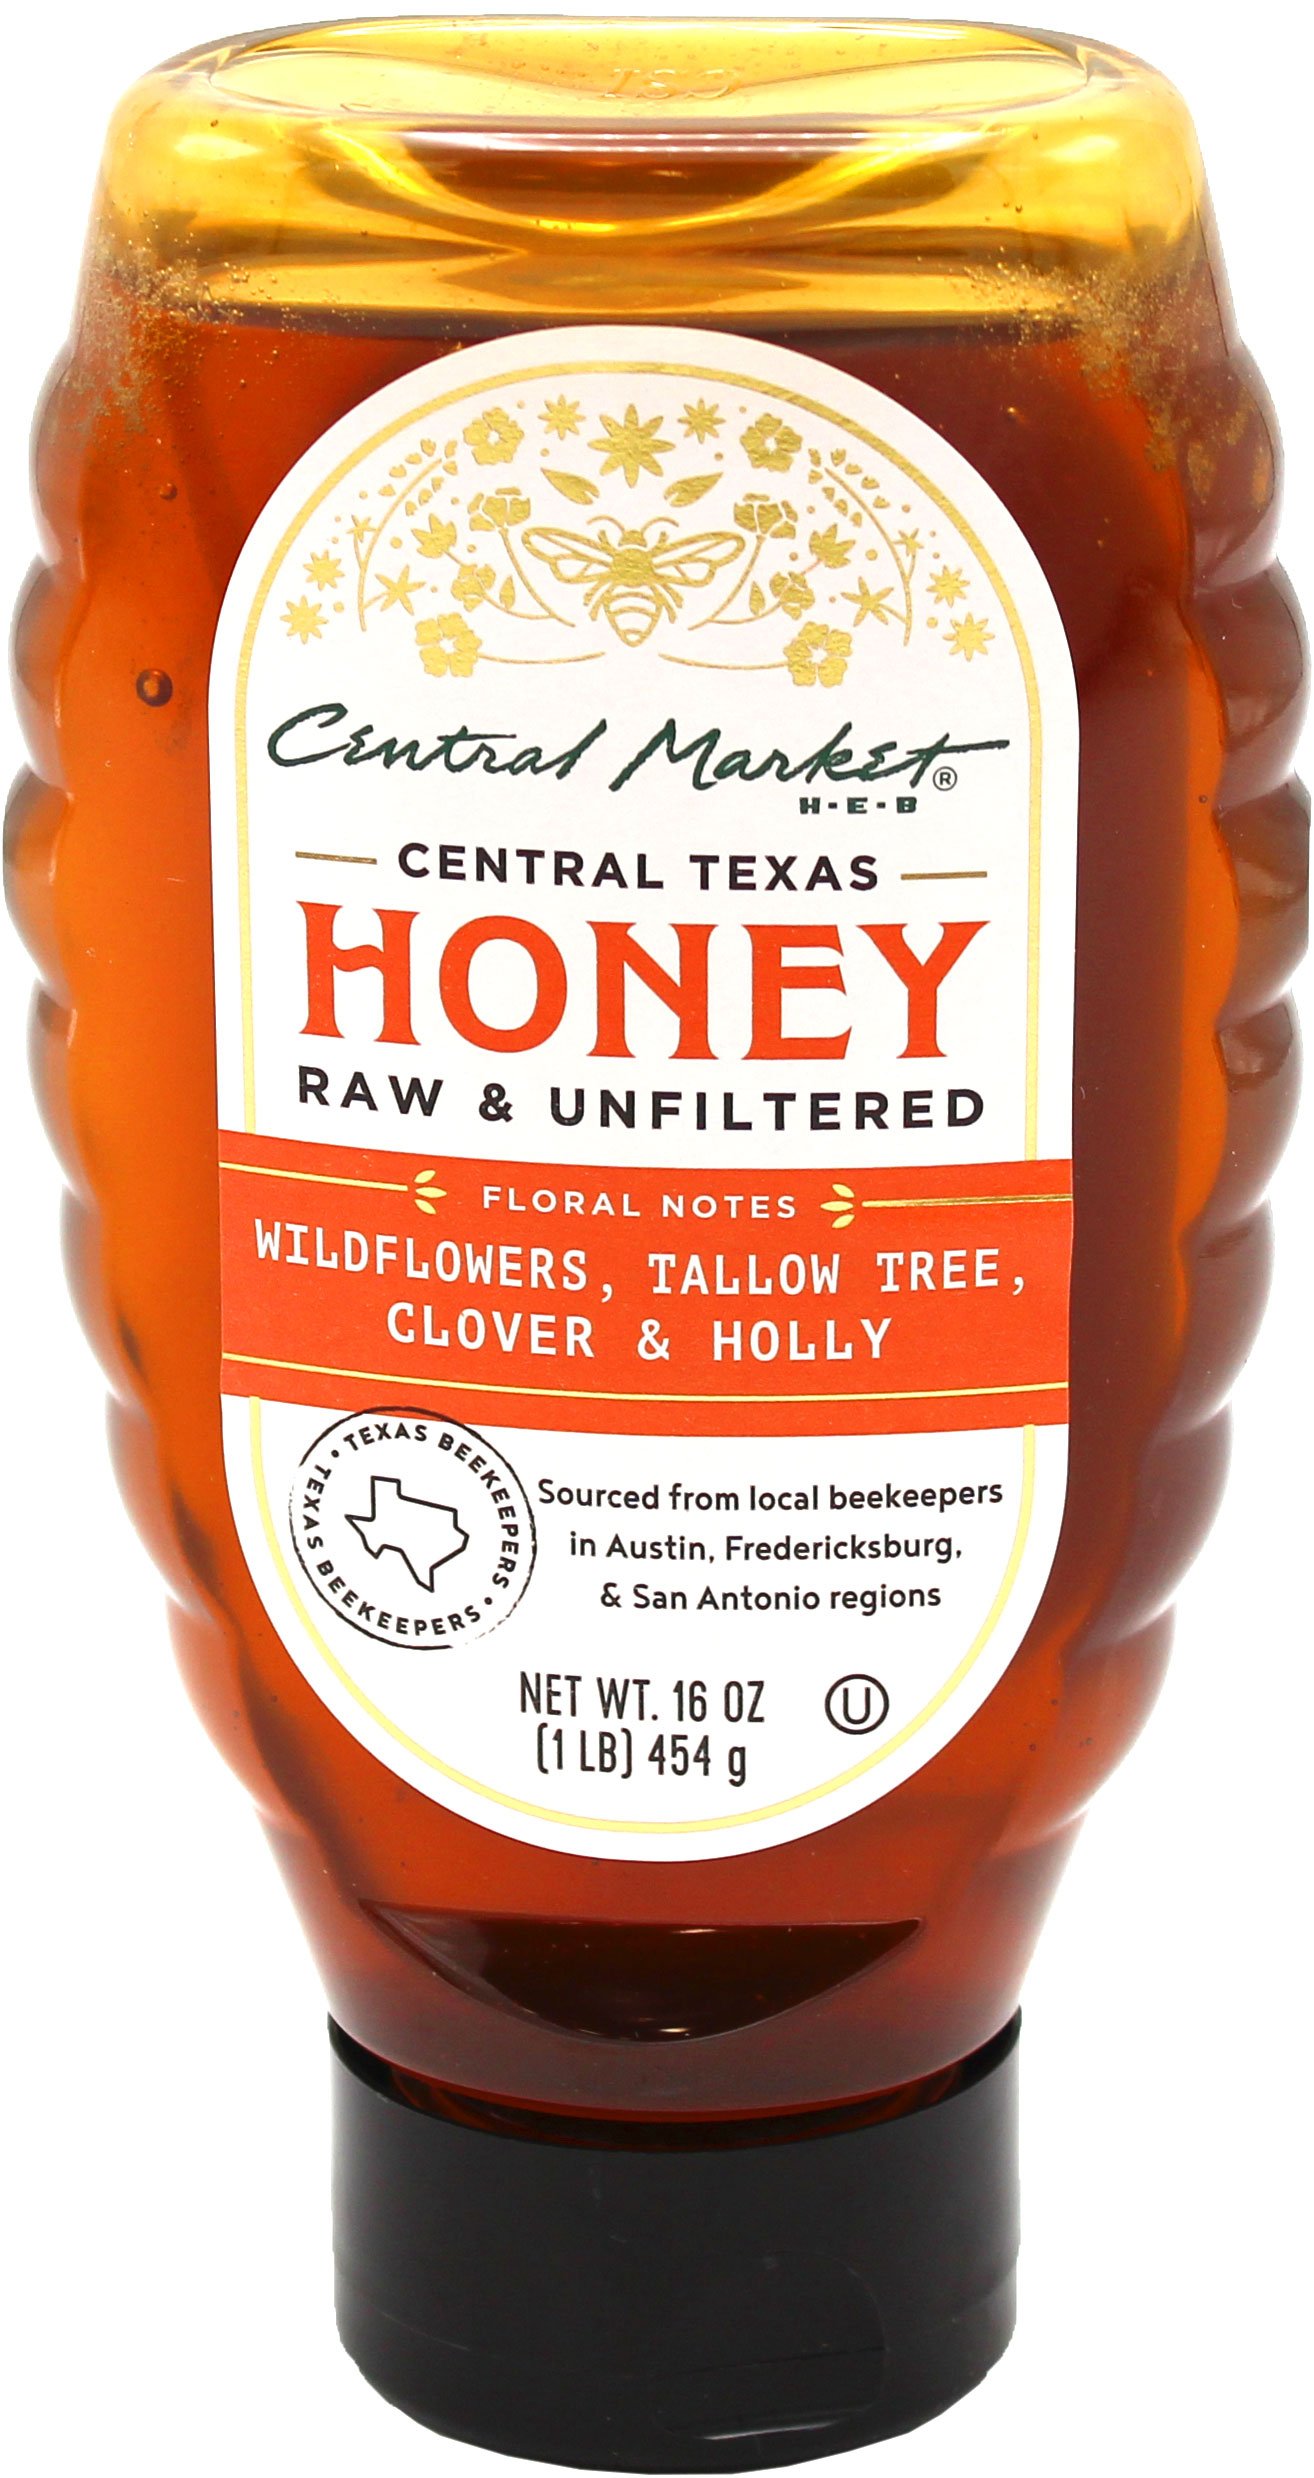 Central Market Central Texas Honey - Shop Honey at H-E-B